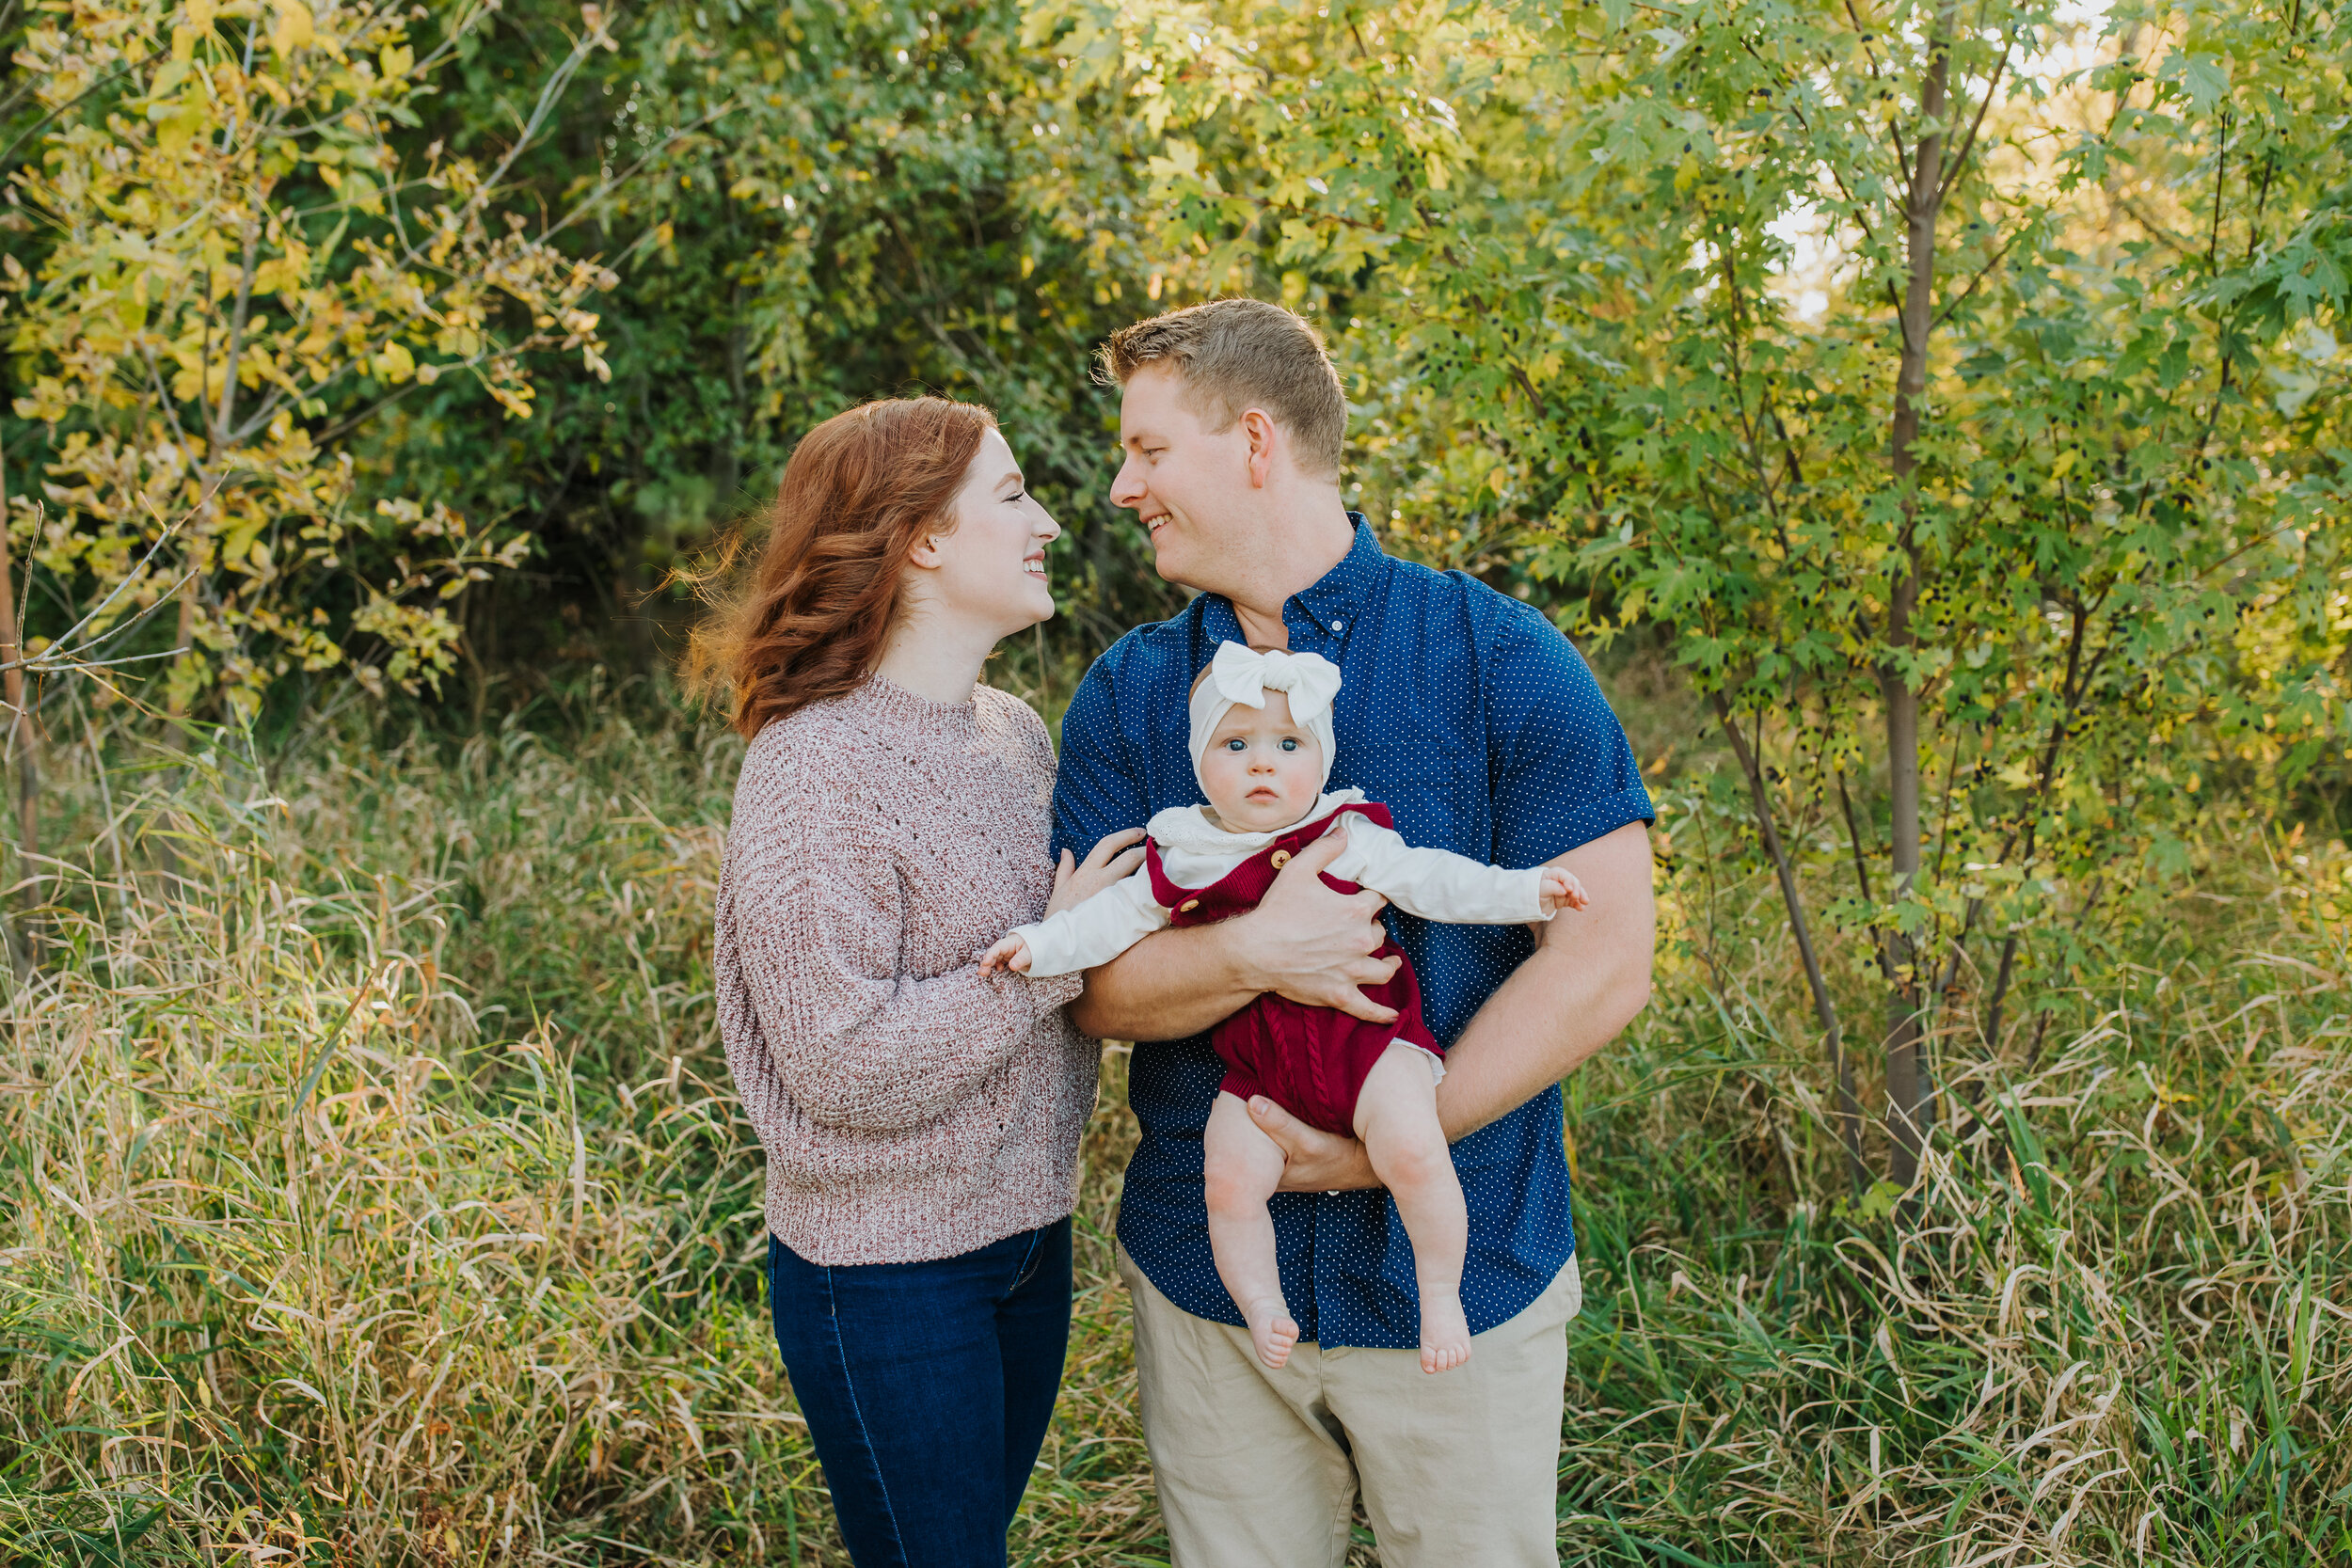 Unger Family Photos 2020 - Nathaniel Jensen Photography - Omaha Nebraska Family Photographer-5.jpg